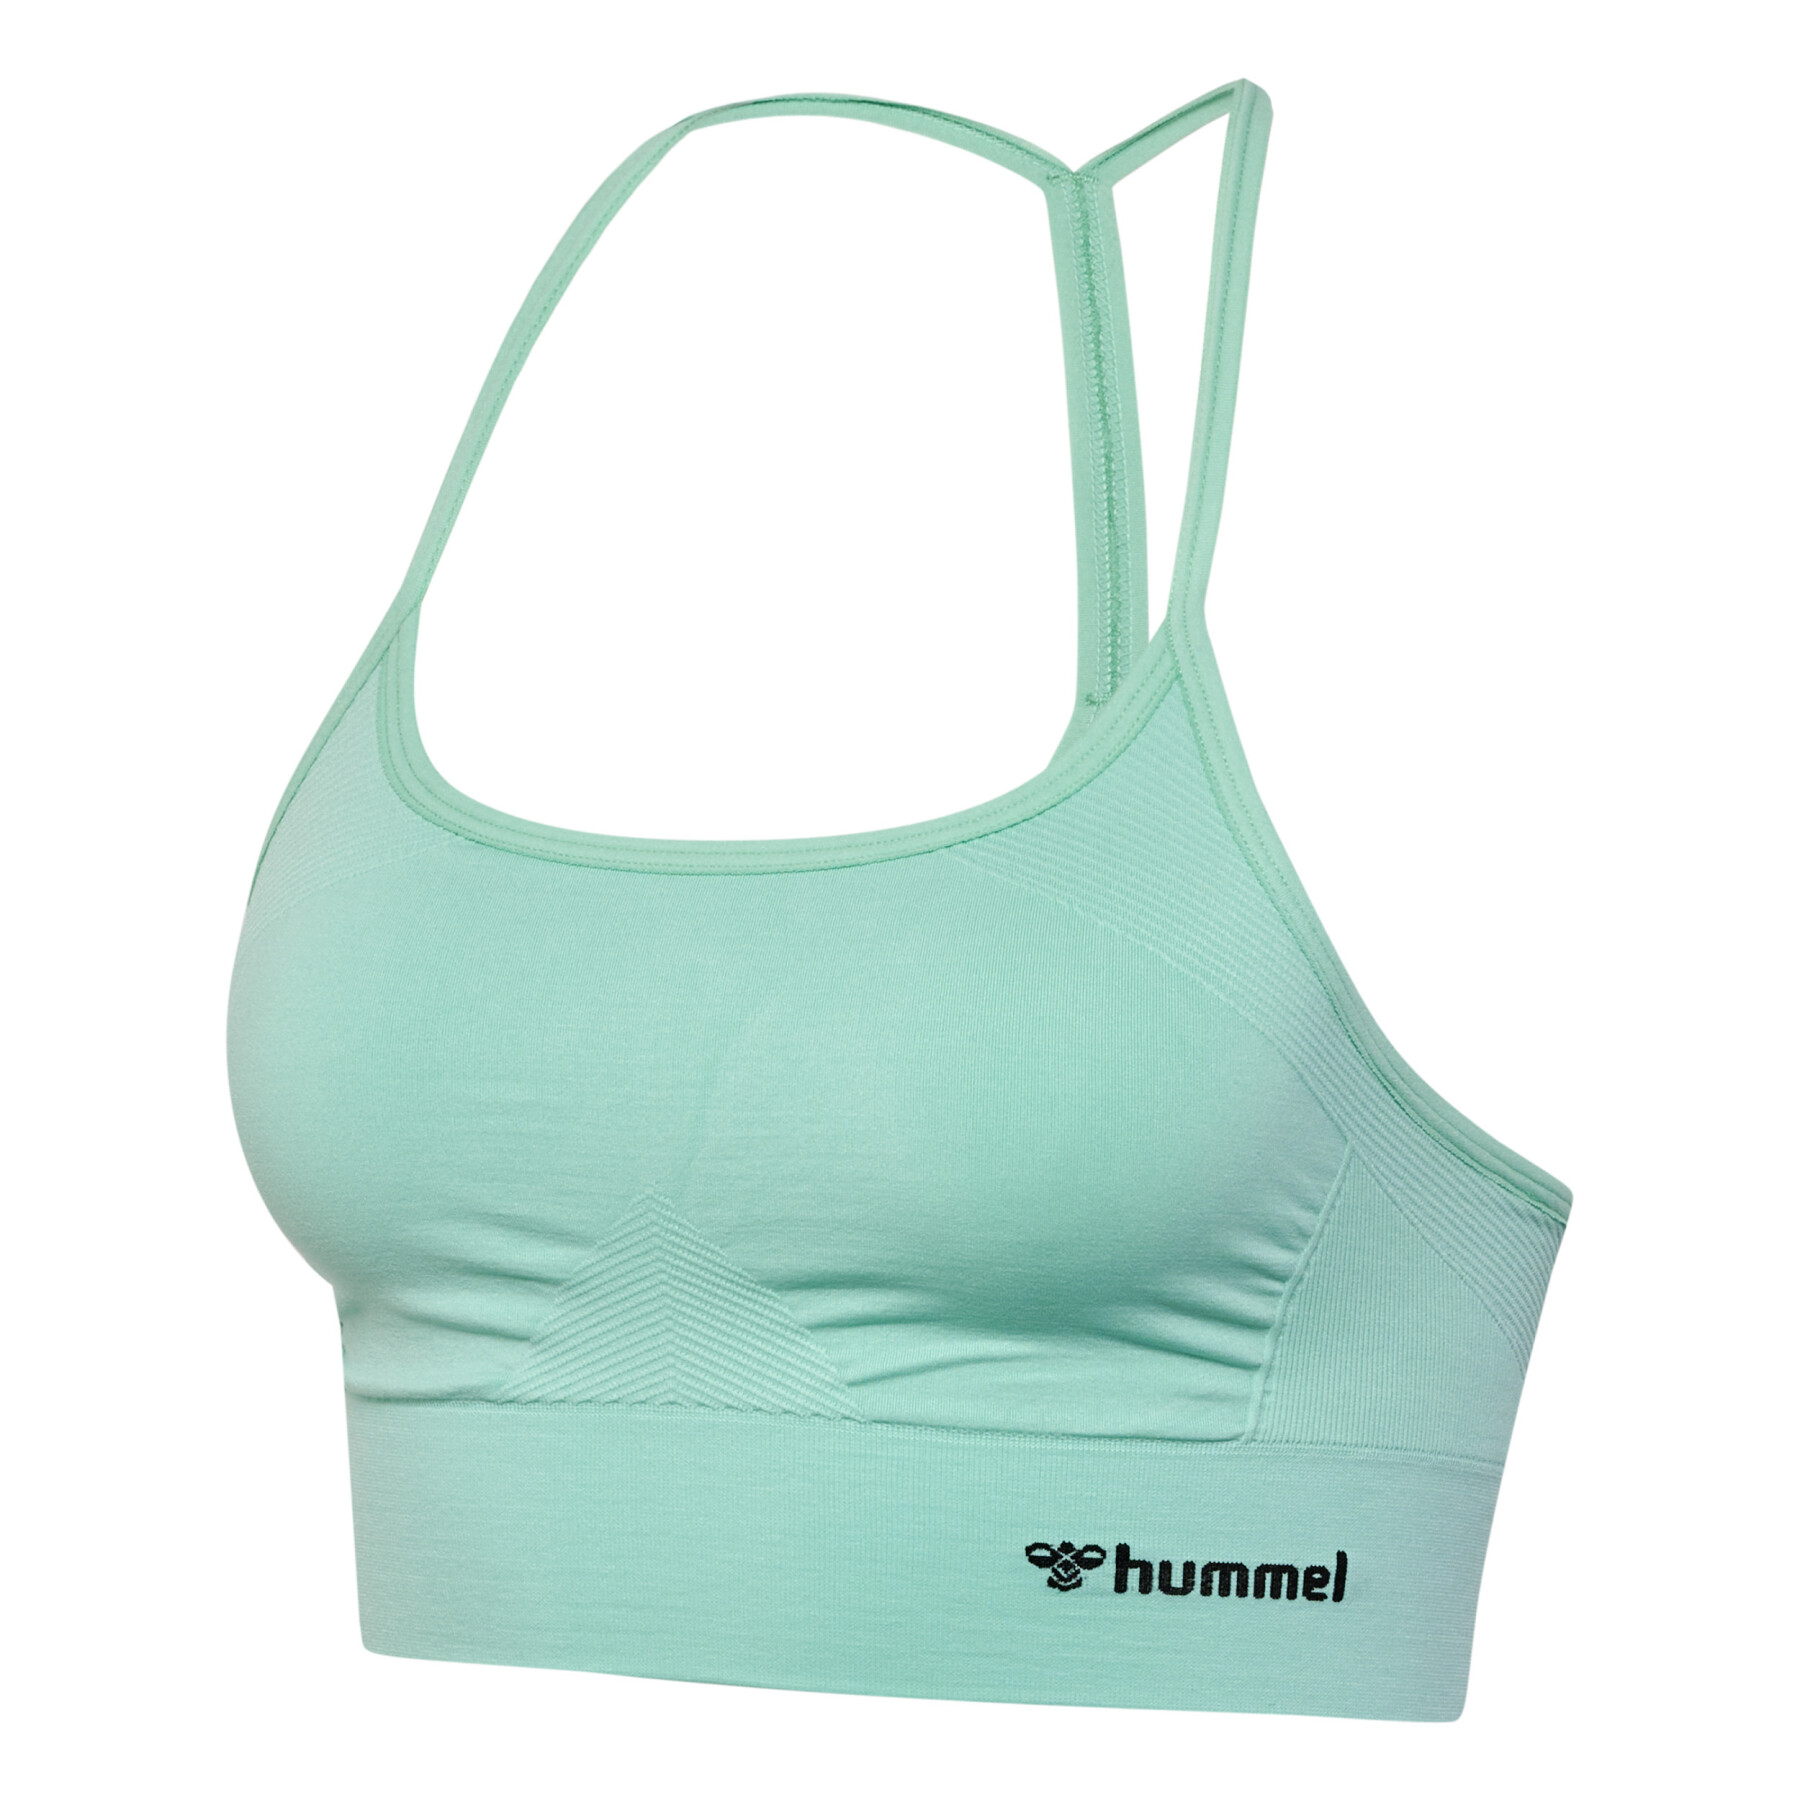 Women's bra Hummel Tiffy